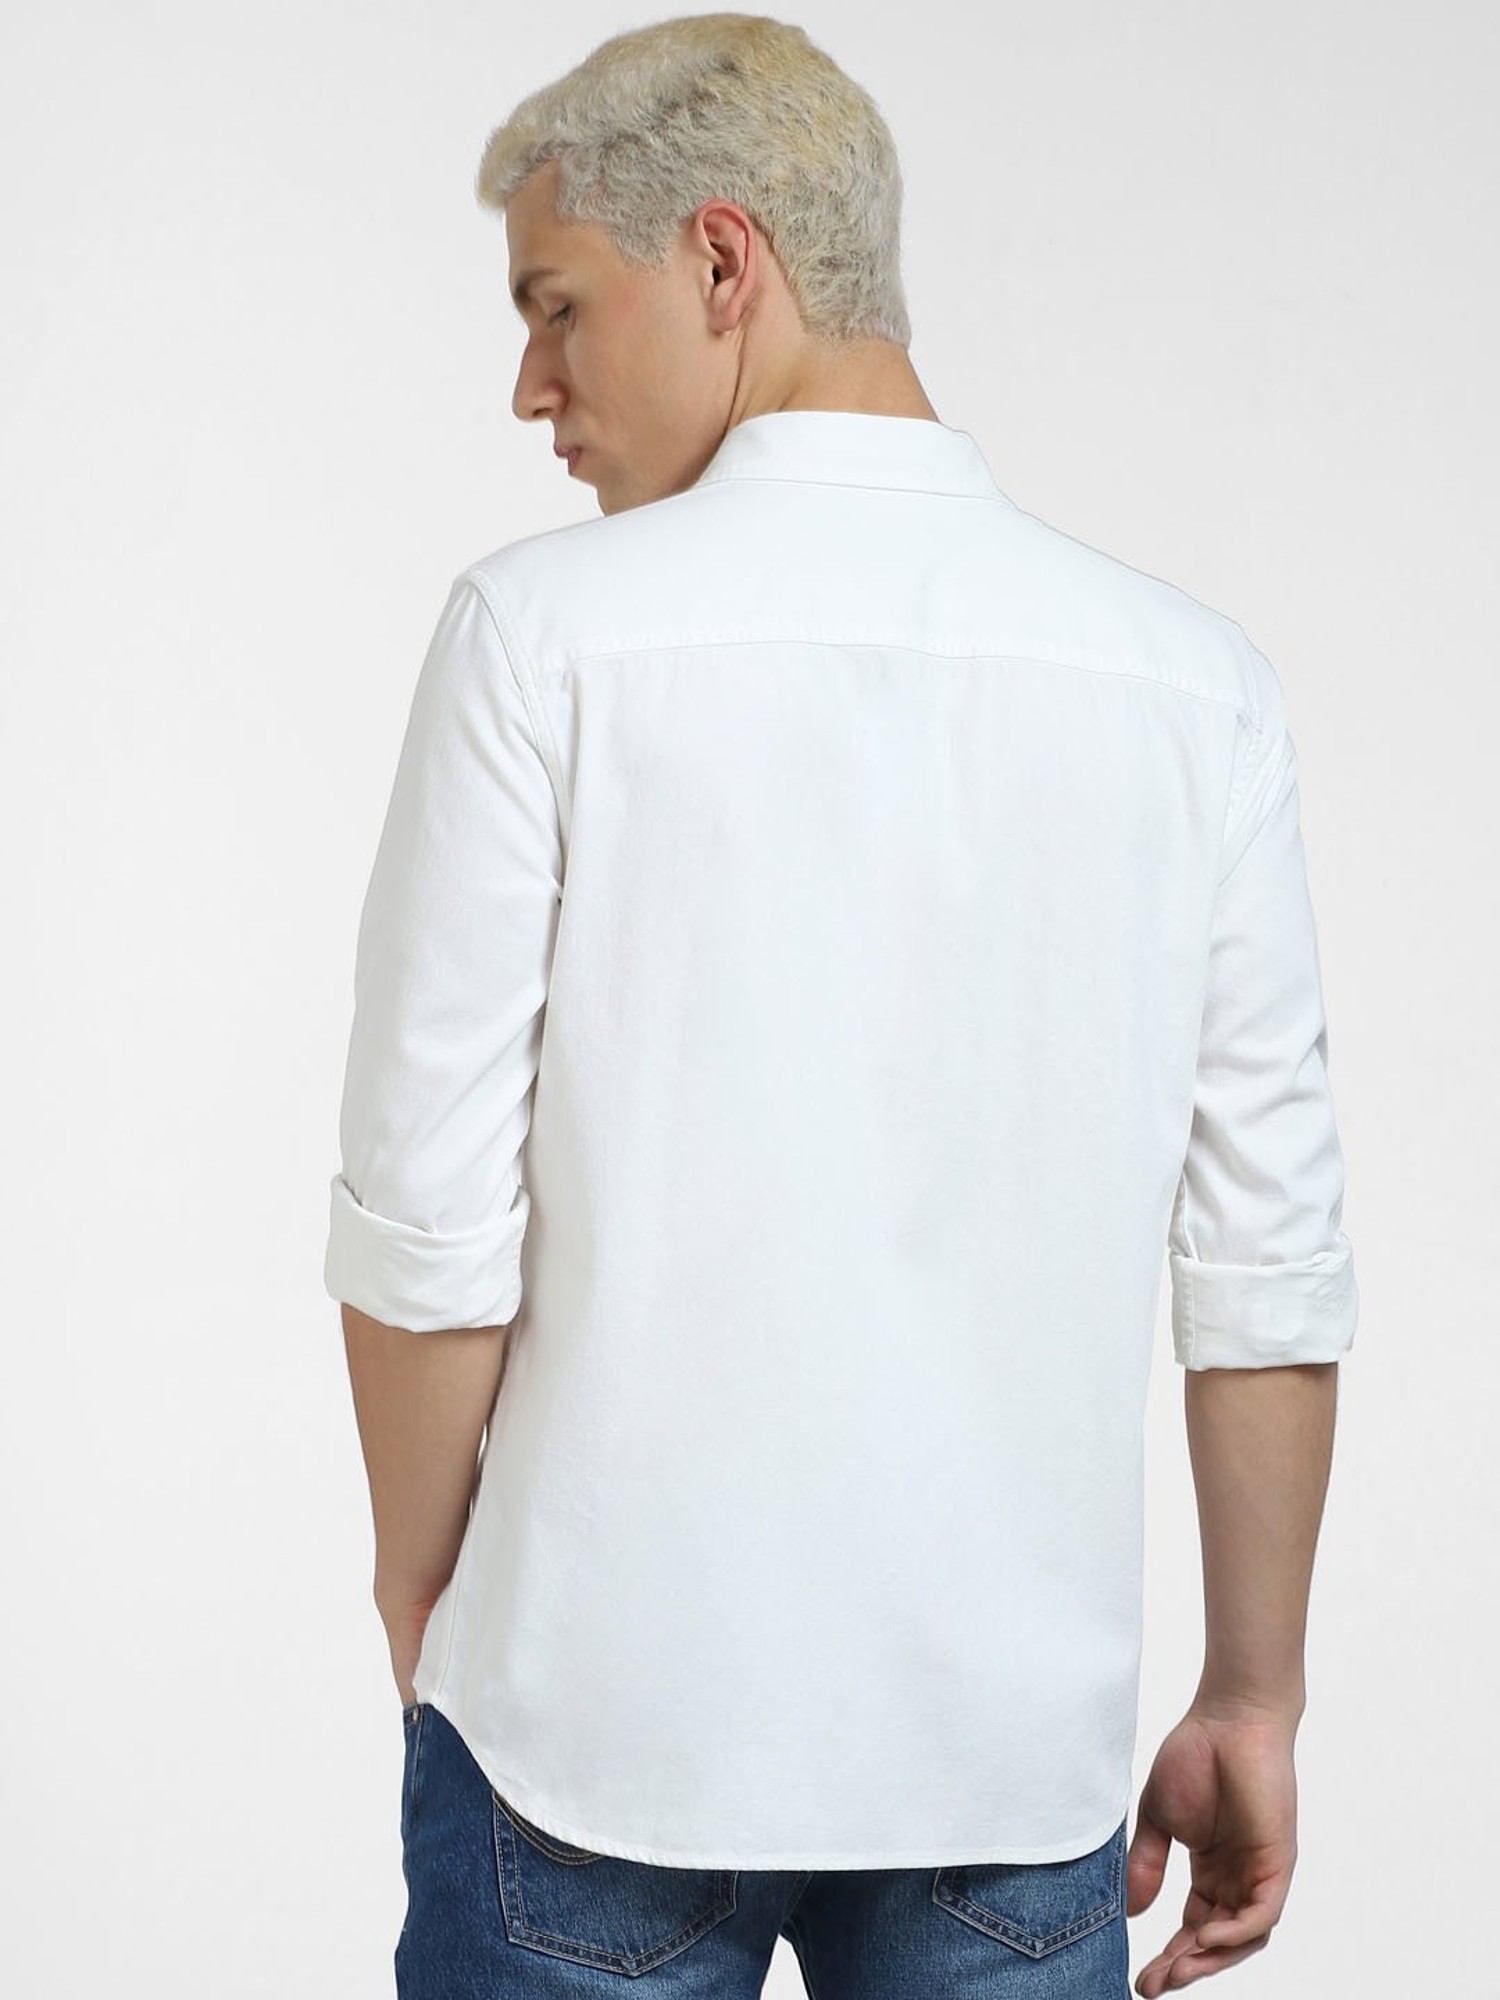 Bare Denim Men White Shirt - Selling Fast at Pantaloons.com